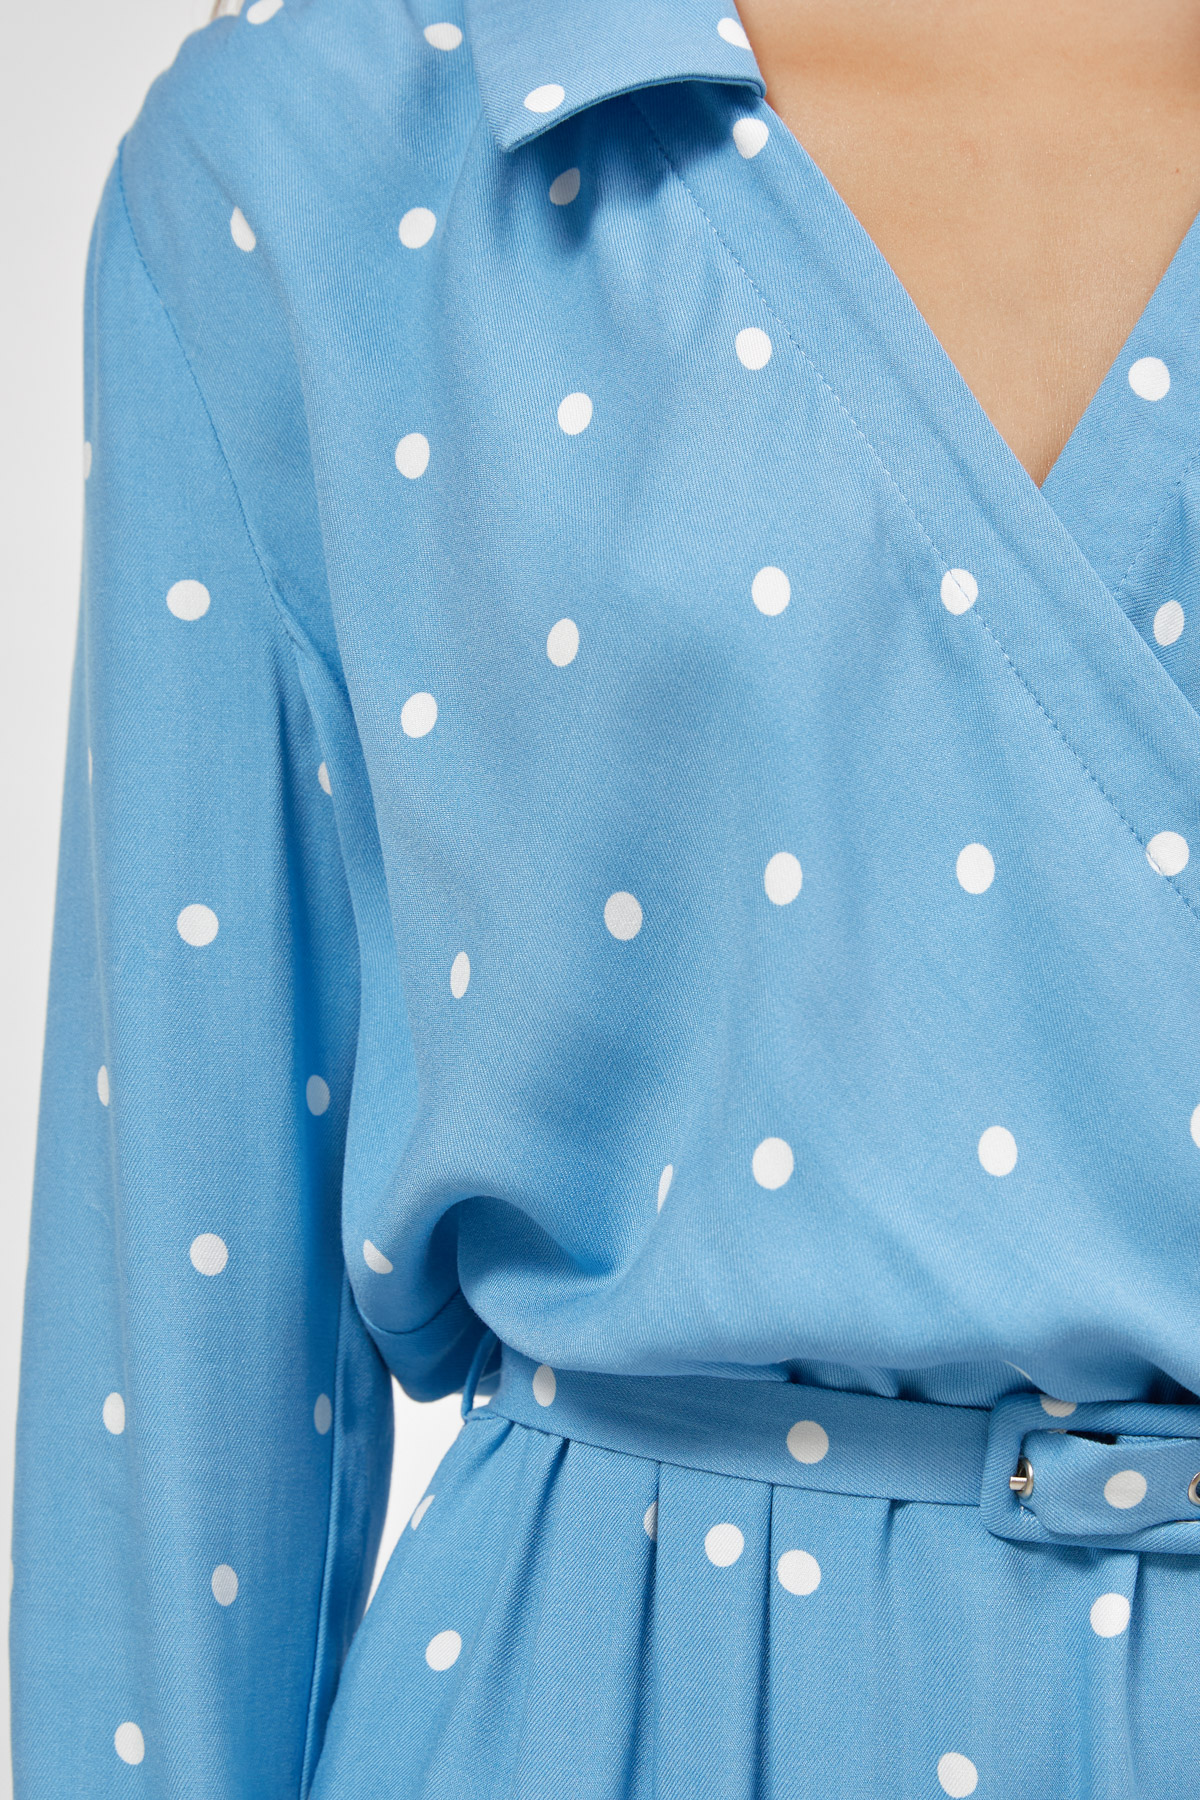 Blue viscose midi dress with white polka dots, photo 3